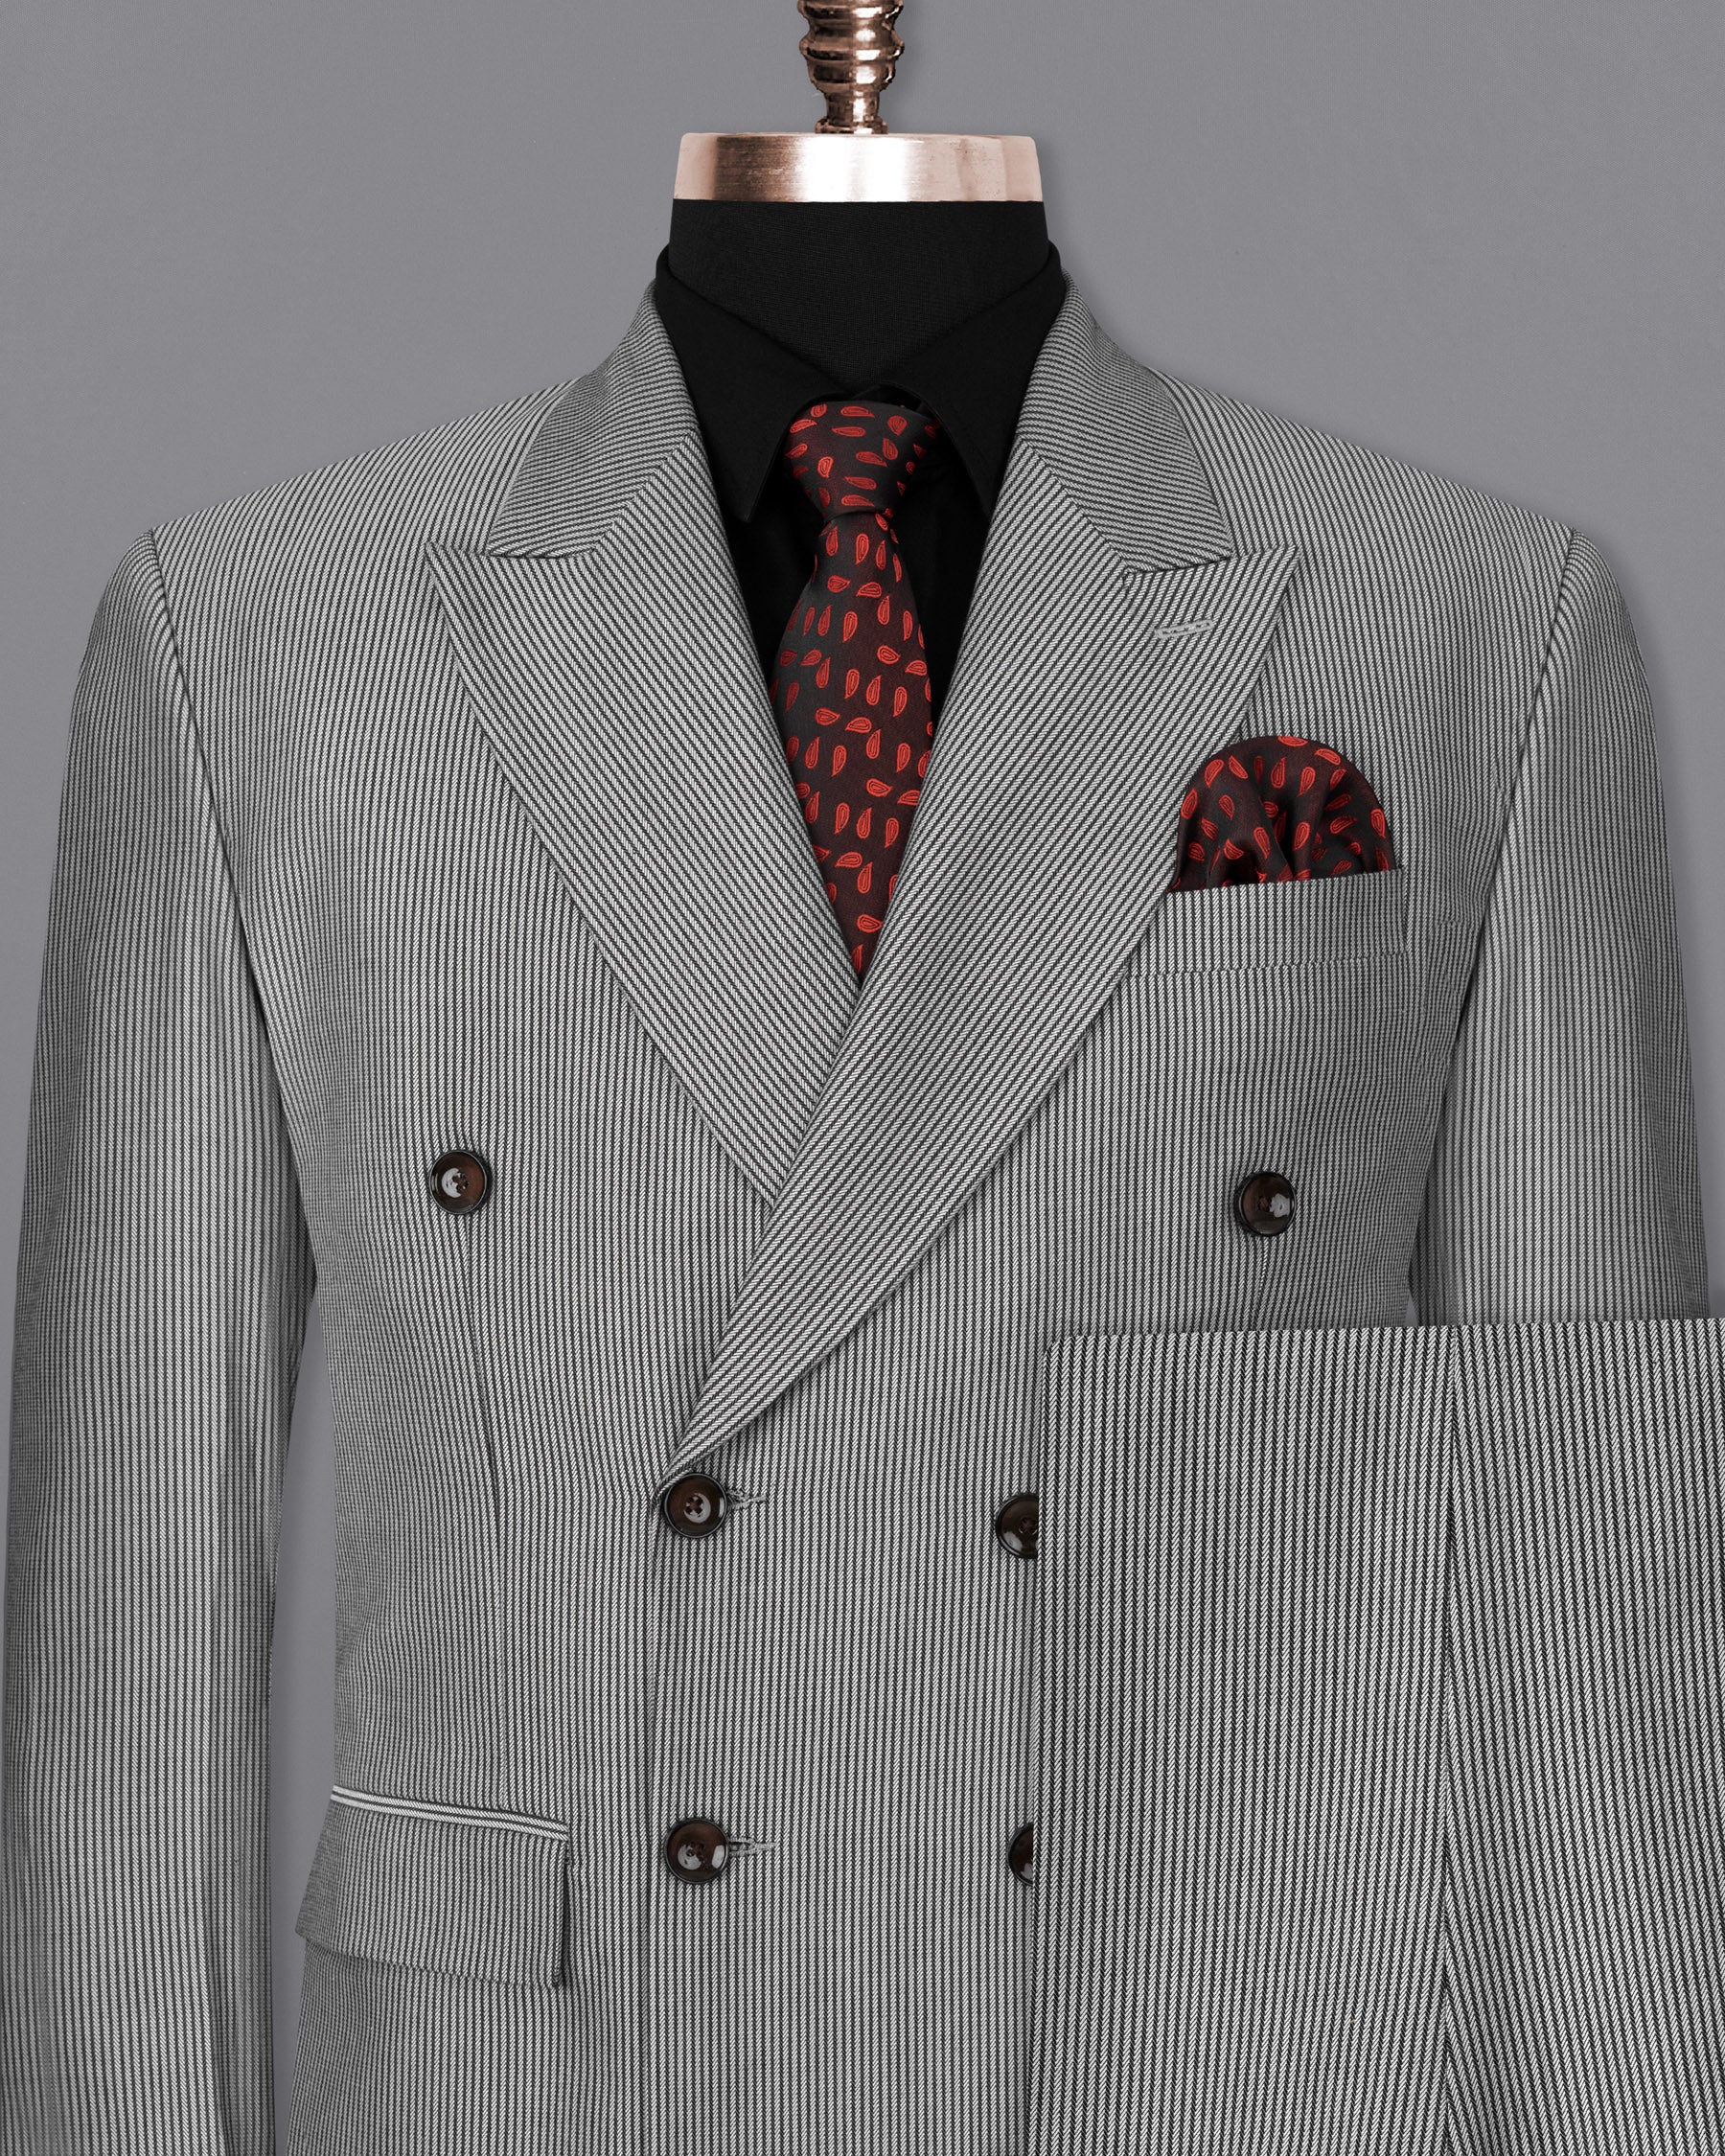 Reigate Stripe Light Gray Suit (USD)